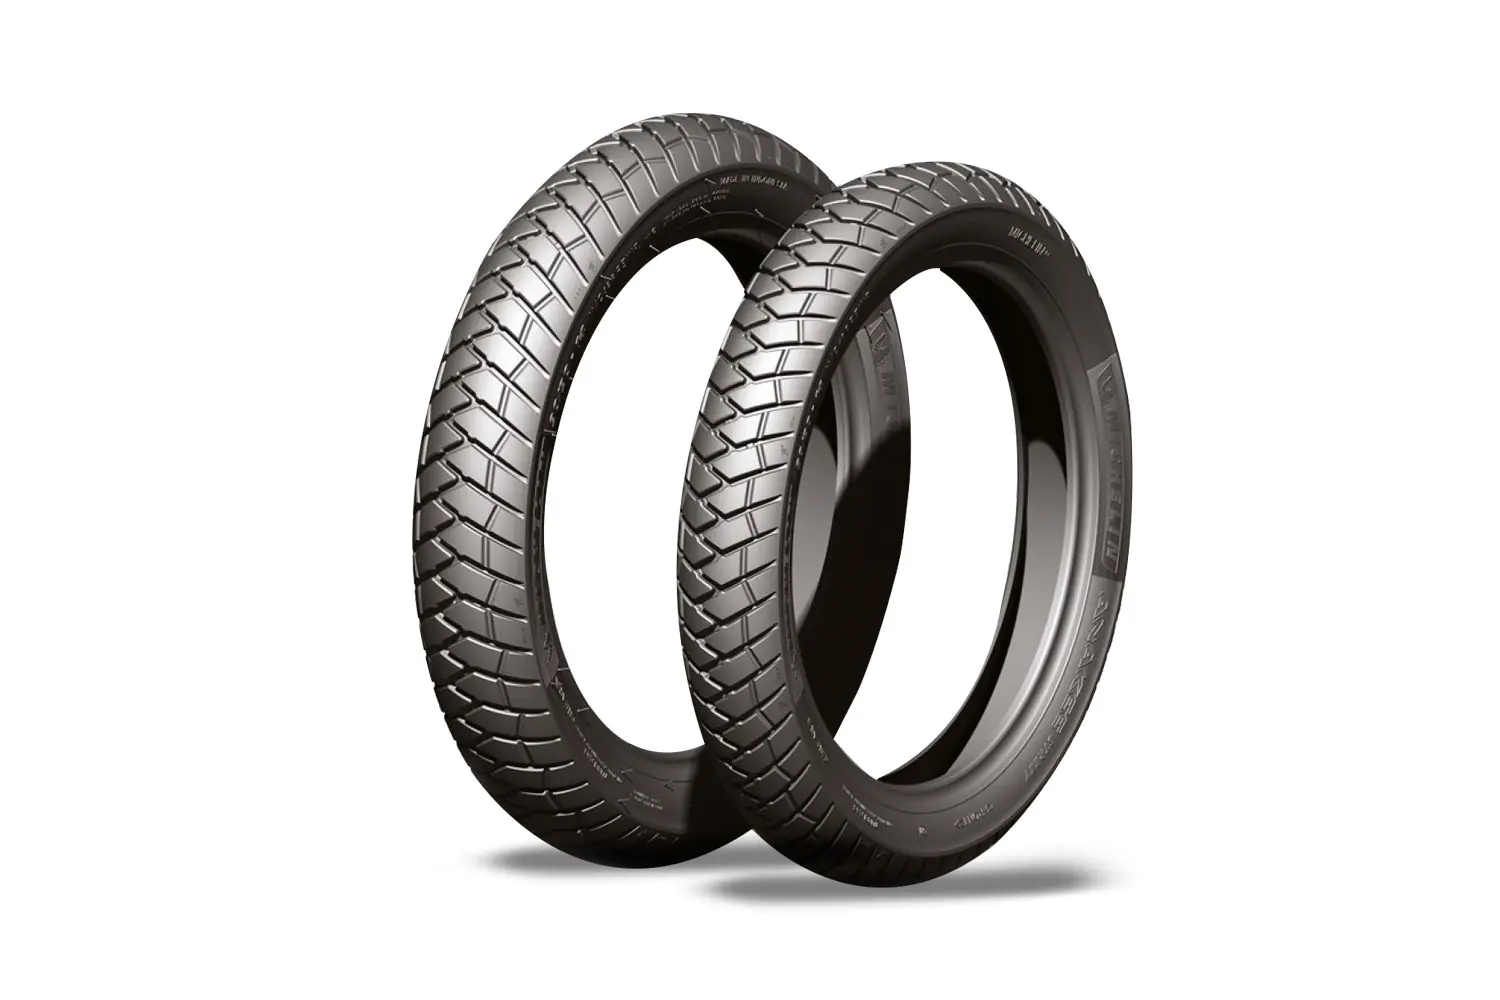 Michelin Michelin 130/70-13 57P Anakeestreet pneumatici nuovi Estivo 